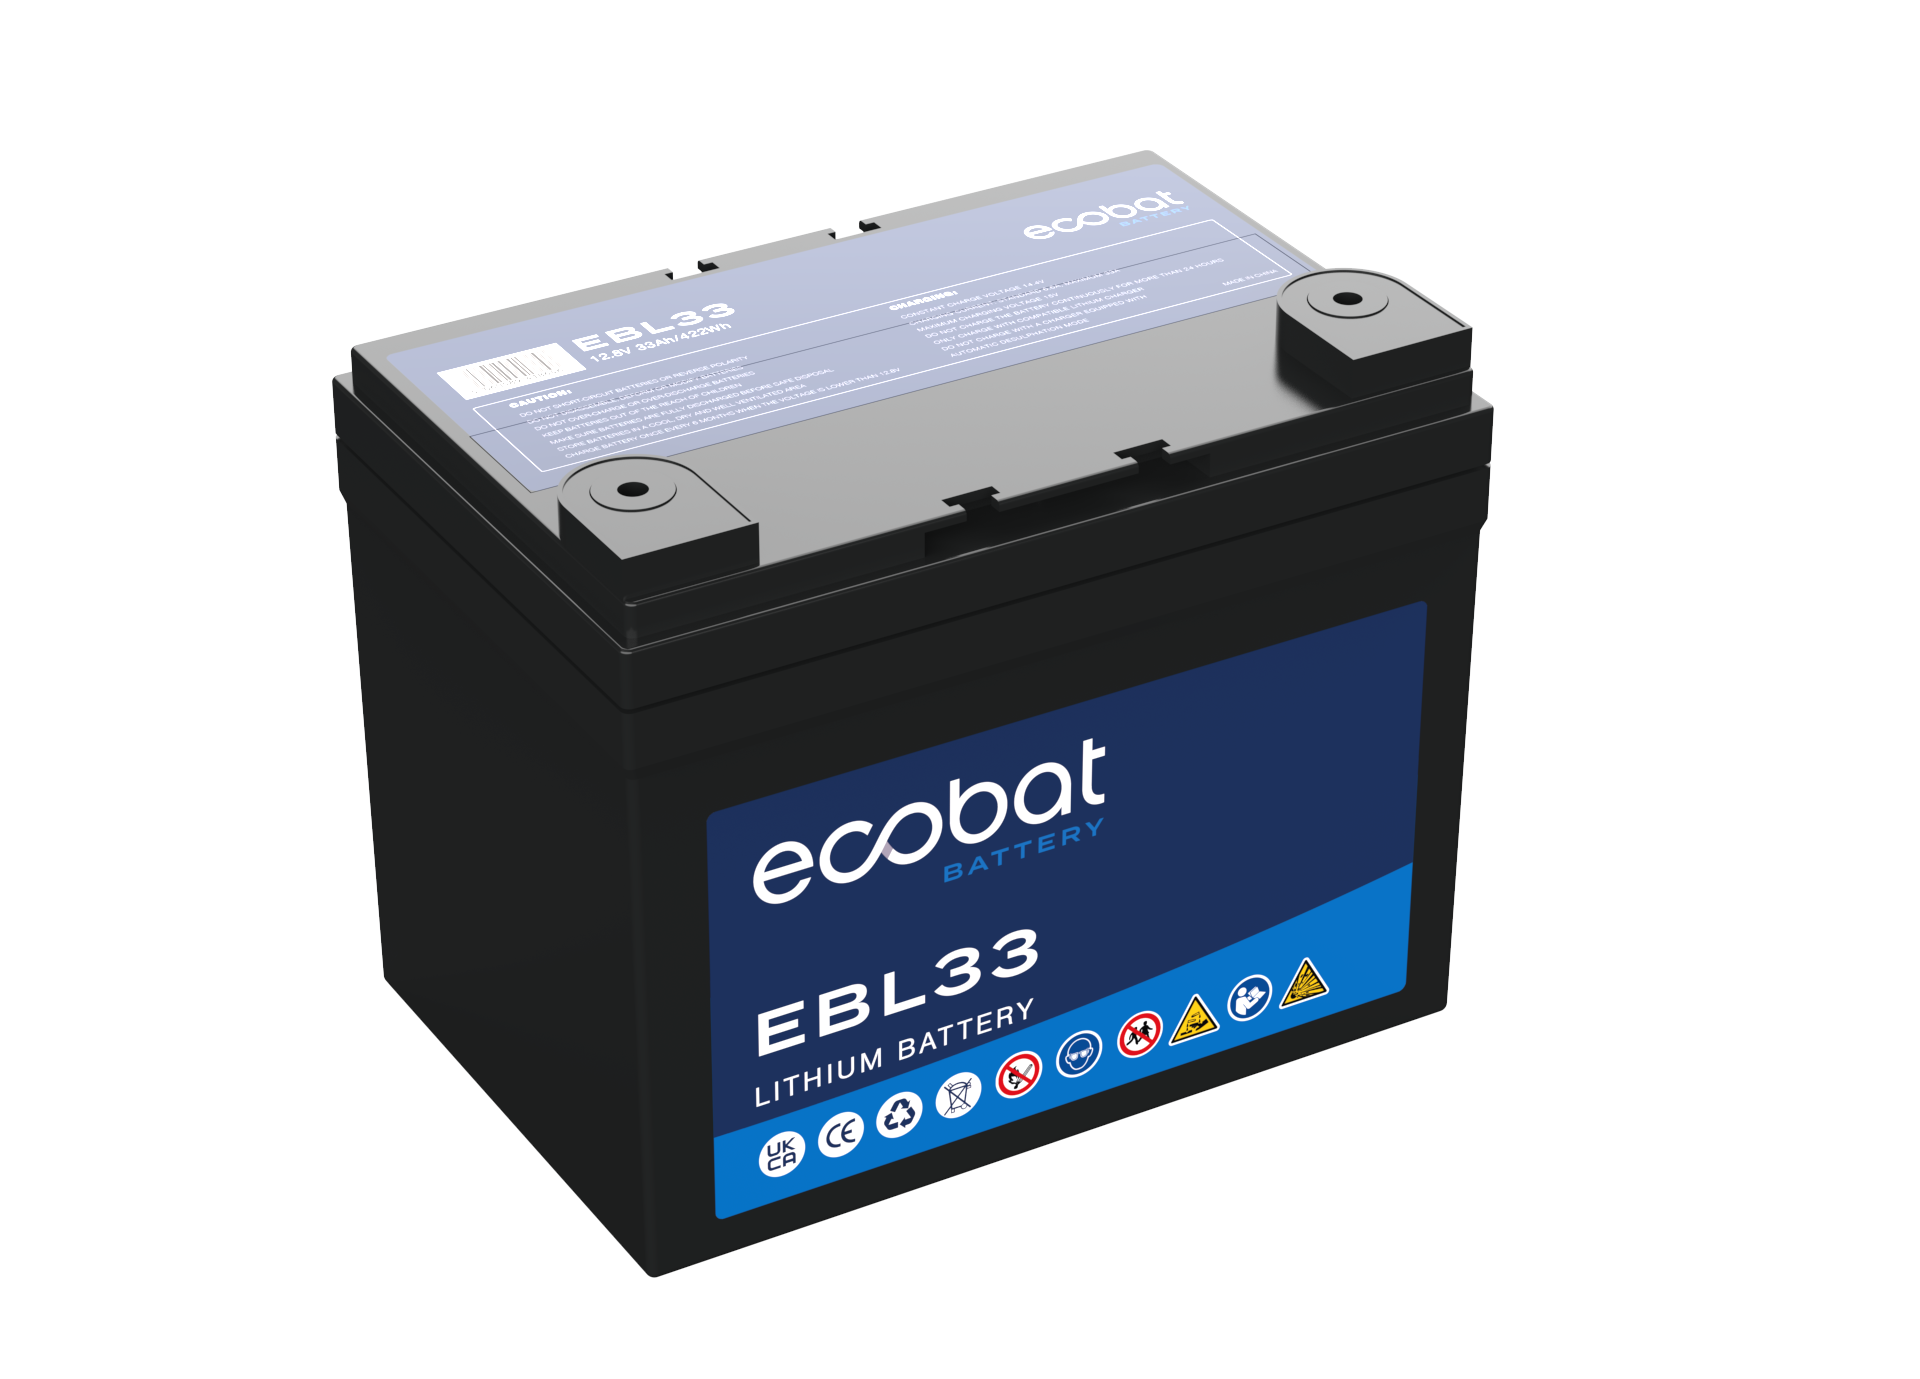 Ecobat EBL33 Lithium Leisure Battery